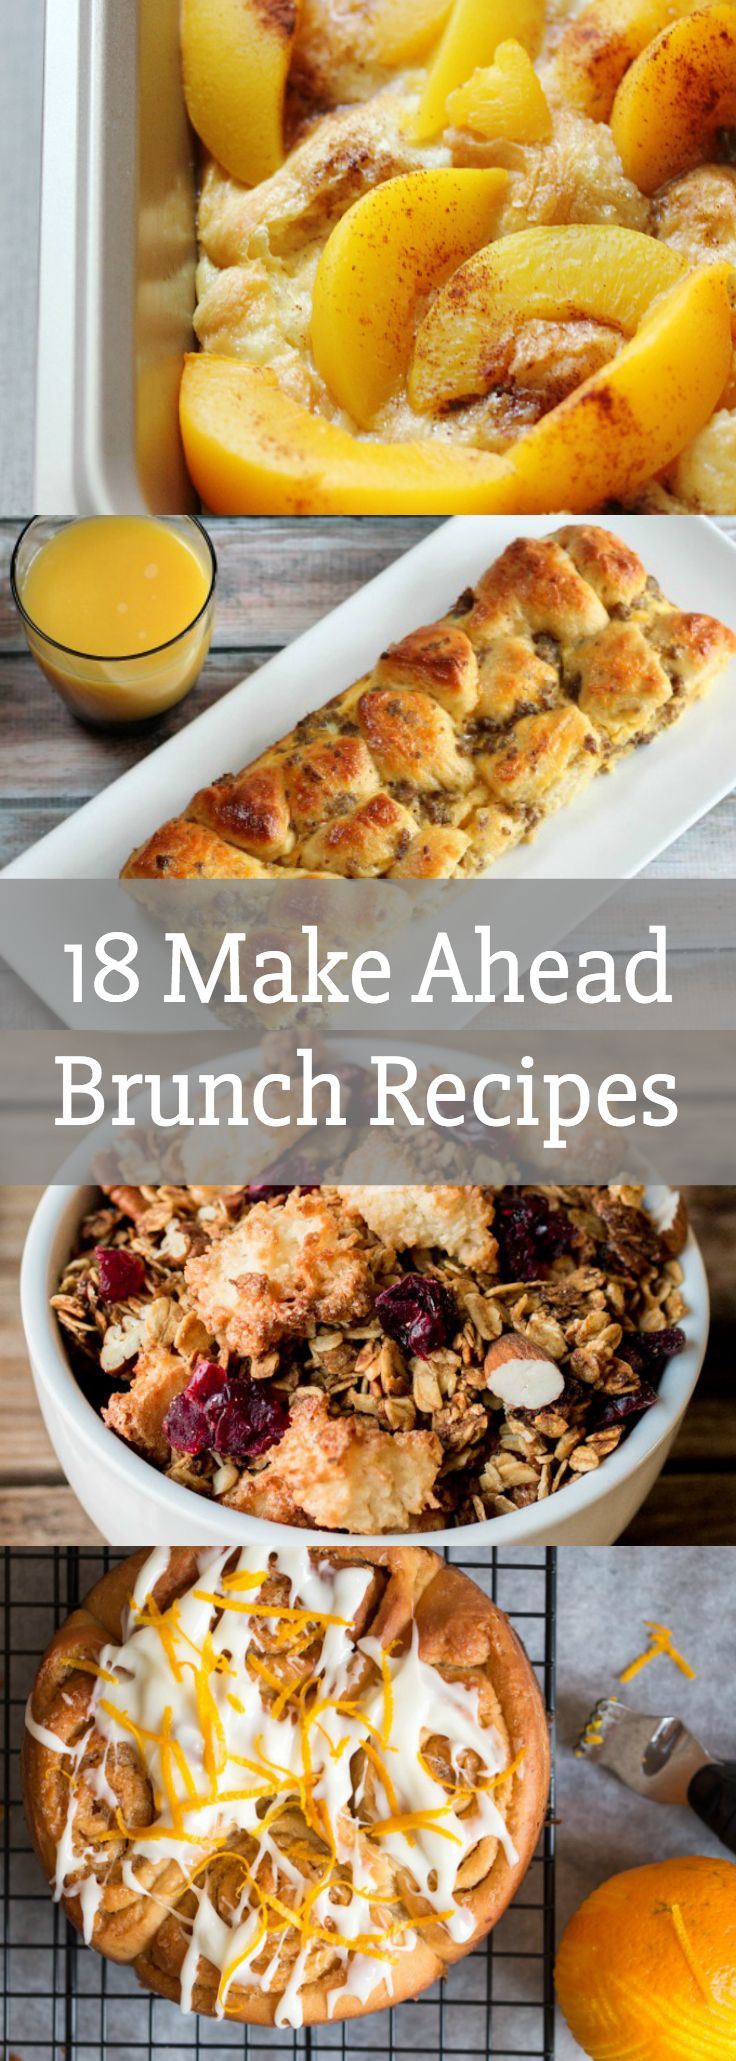 Make Ahead Easter Dinner
 18 Make Ahead Brunch Recipes Breakfast brunch ideas